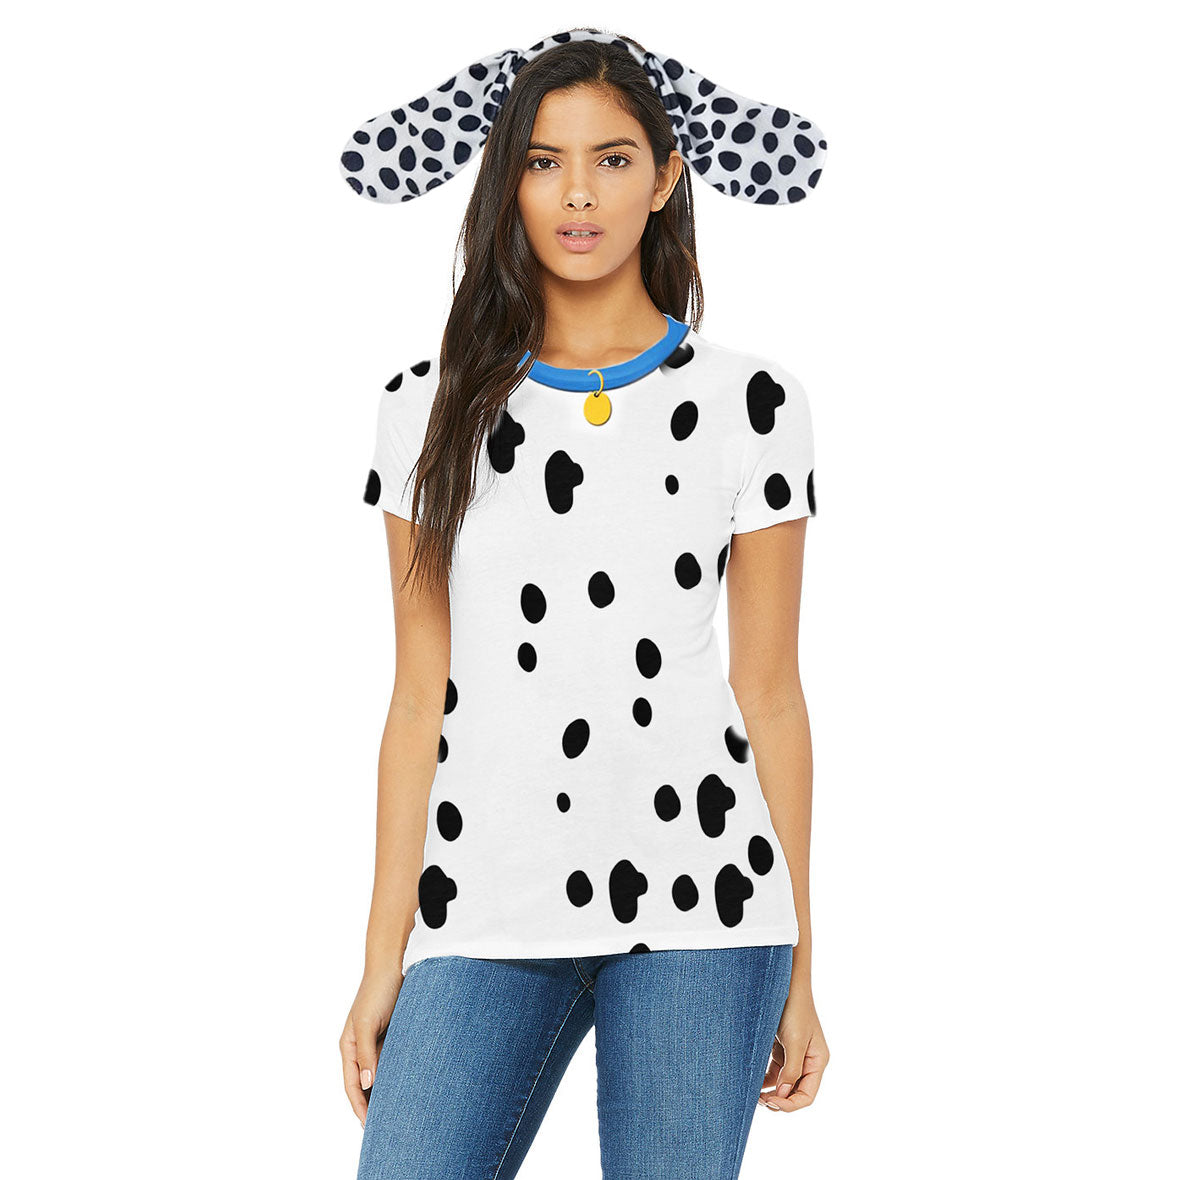 Pretend I'm a Dalmatian Shirt Lazy Halloween Costume Shirt - Kingteeshop